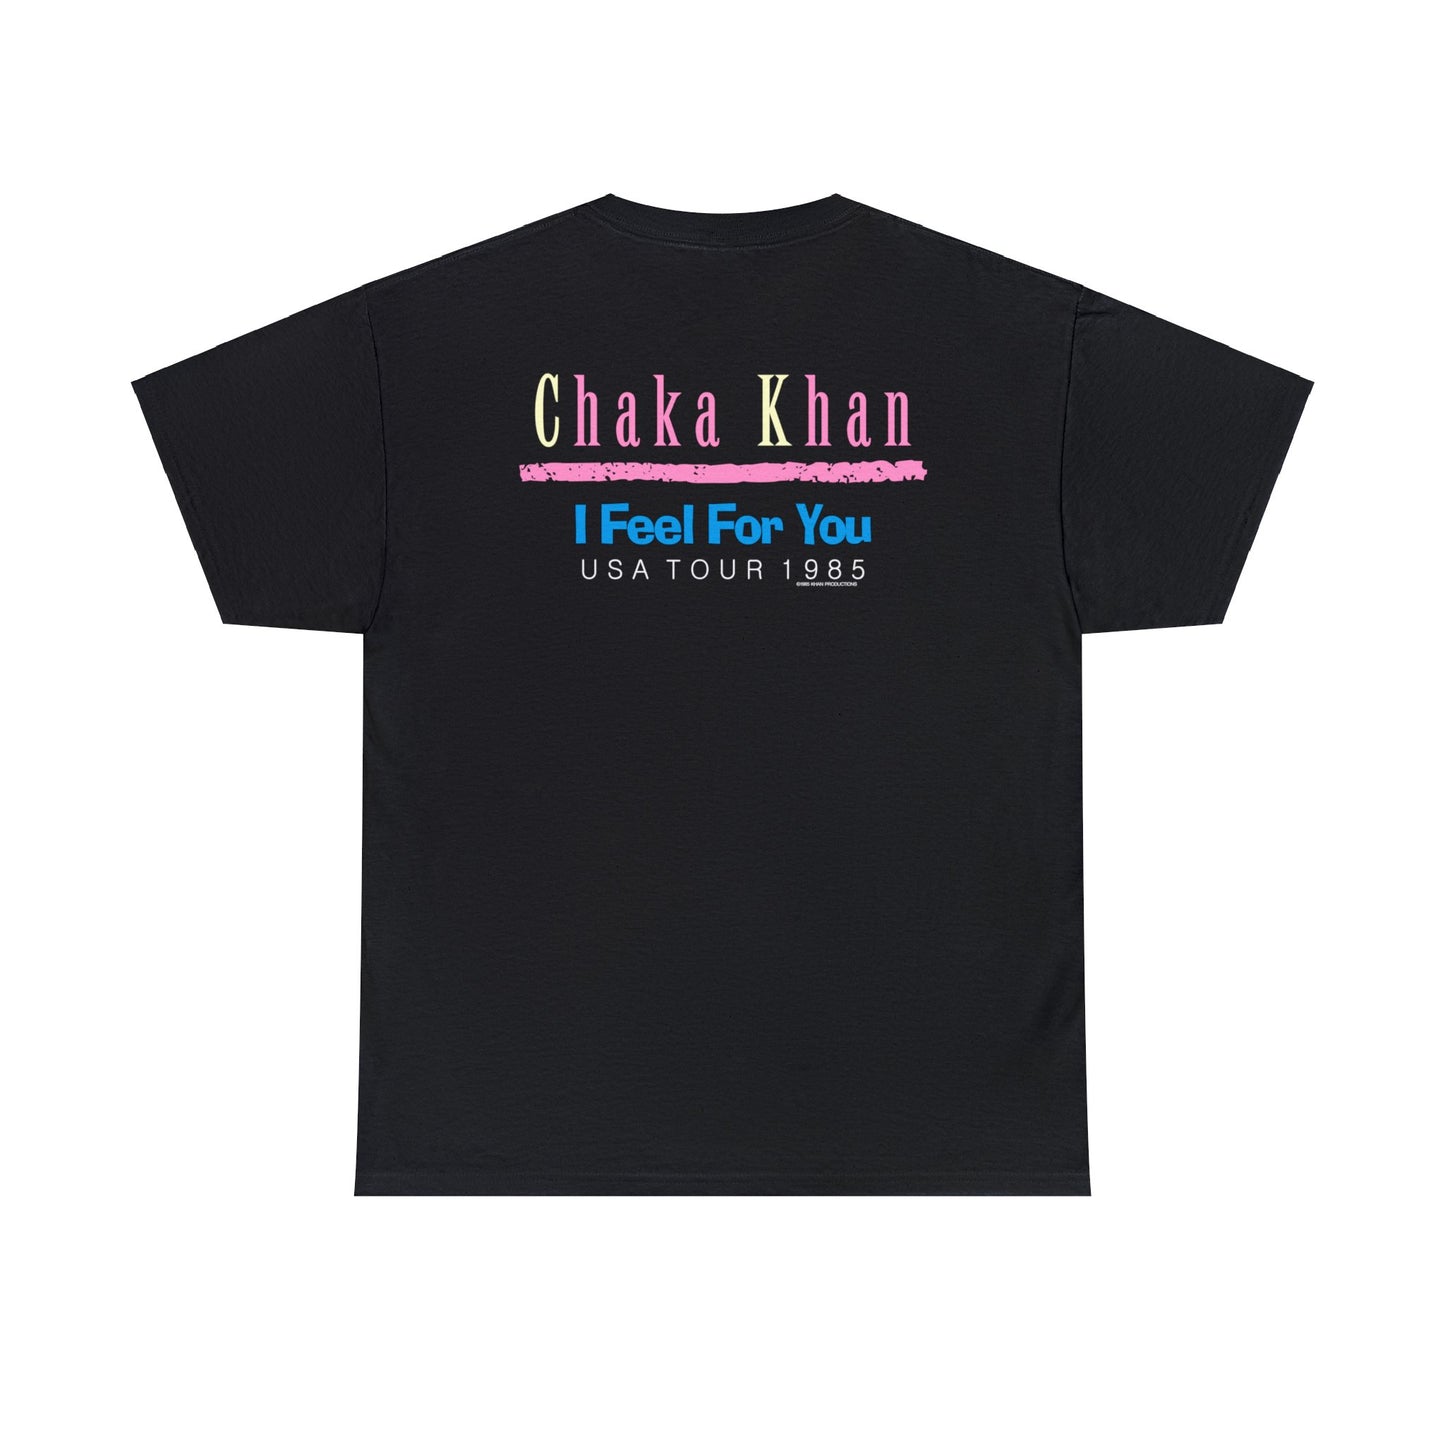 CHAKA KHAN I Feel For You USA Tour 1985 T-shirt for Sale